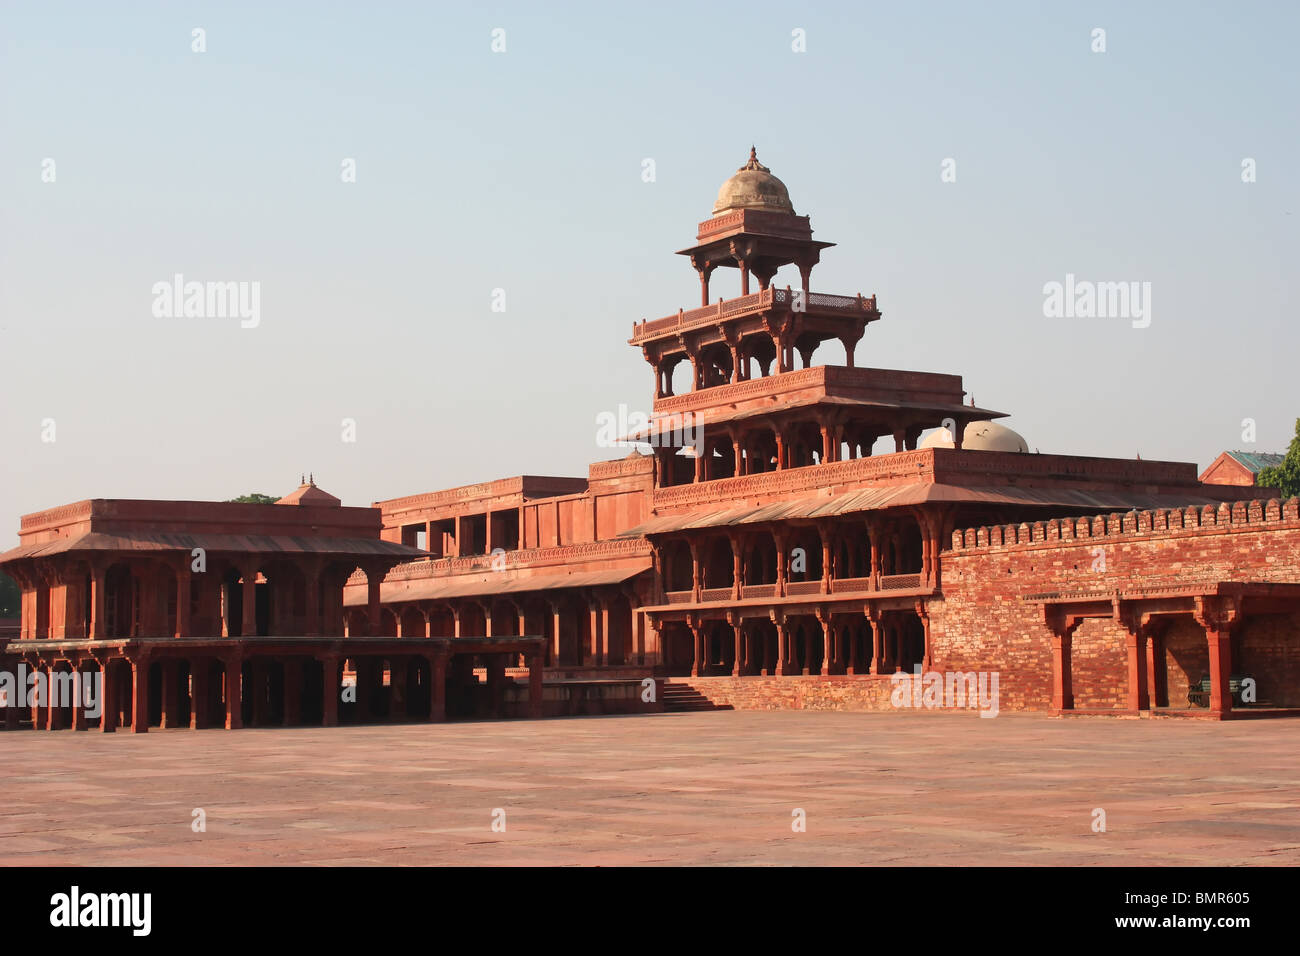 Fatehpur Sikri - Indian monument Mughal architecture -Palace of Akbar Stock Photo